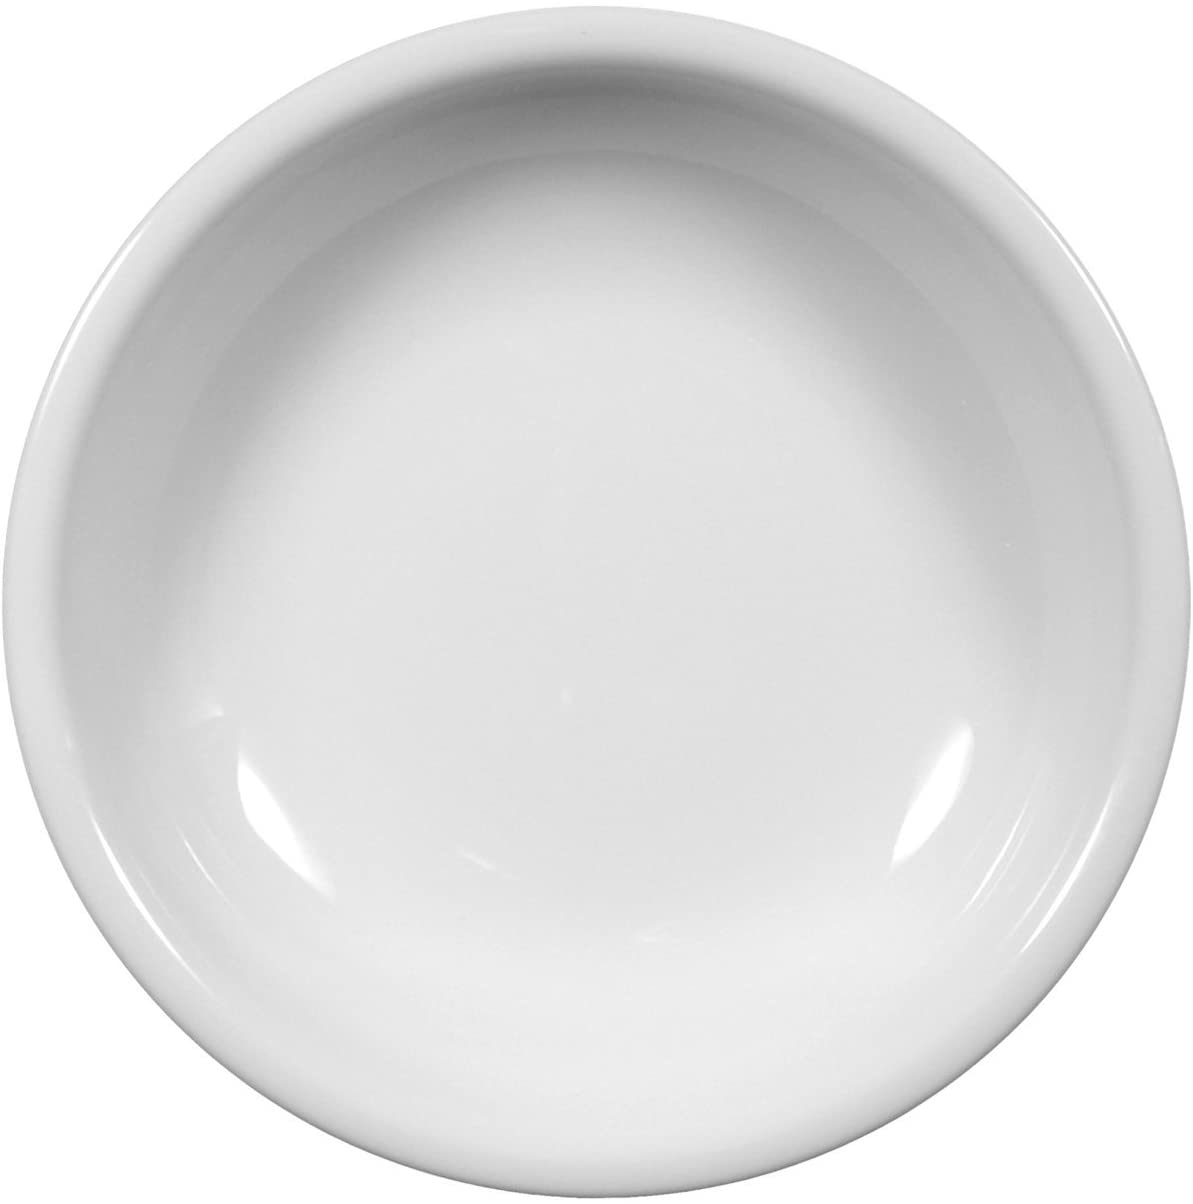 Seltmann Weiden Compact Rimmed Soup Plate, Porcelain, White, Dishwasher Safe, 22 cm, 1450041